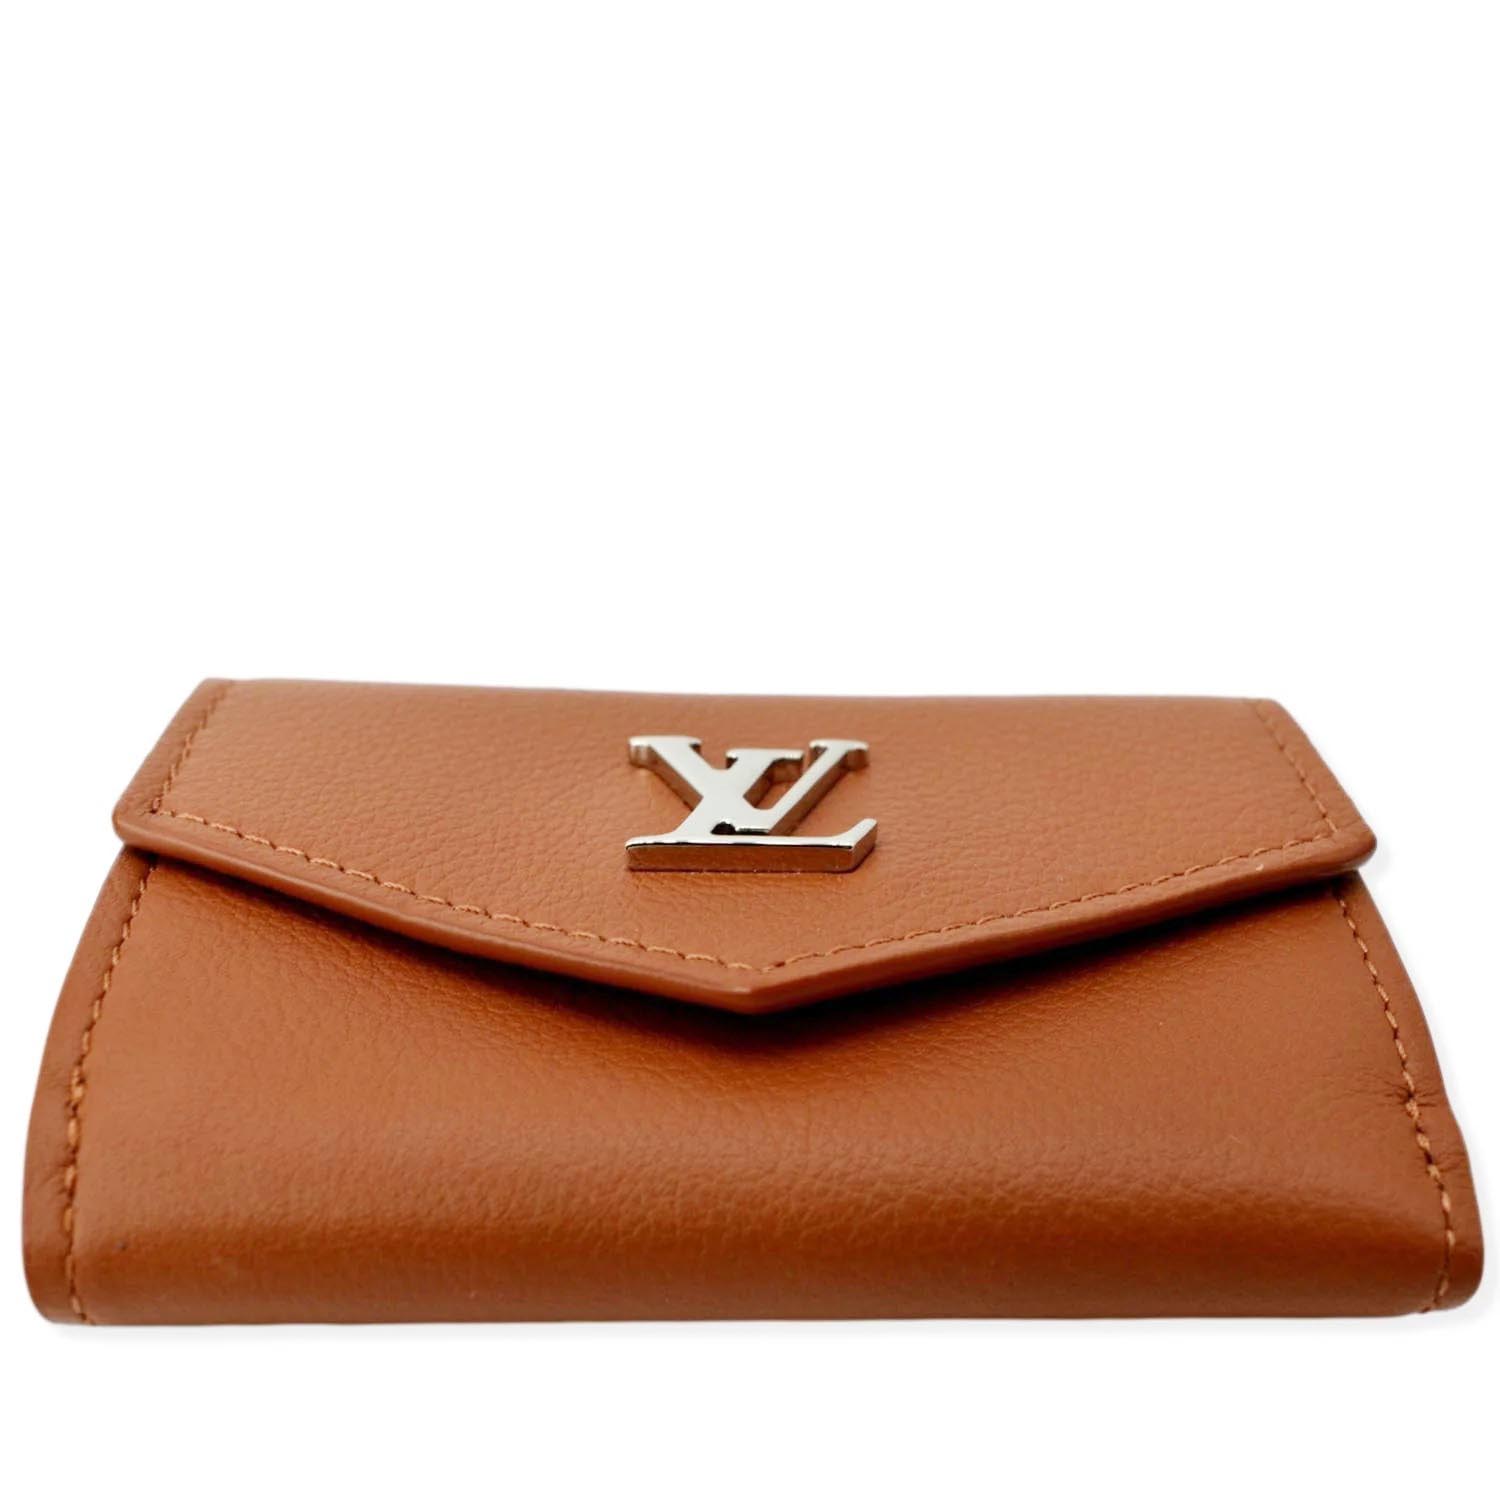 Louis Vuitton Lockmini Wallet Leather Black 125209394